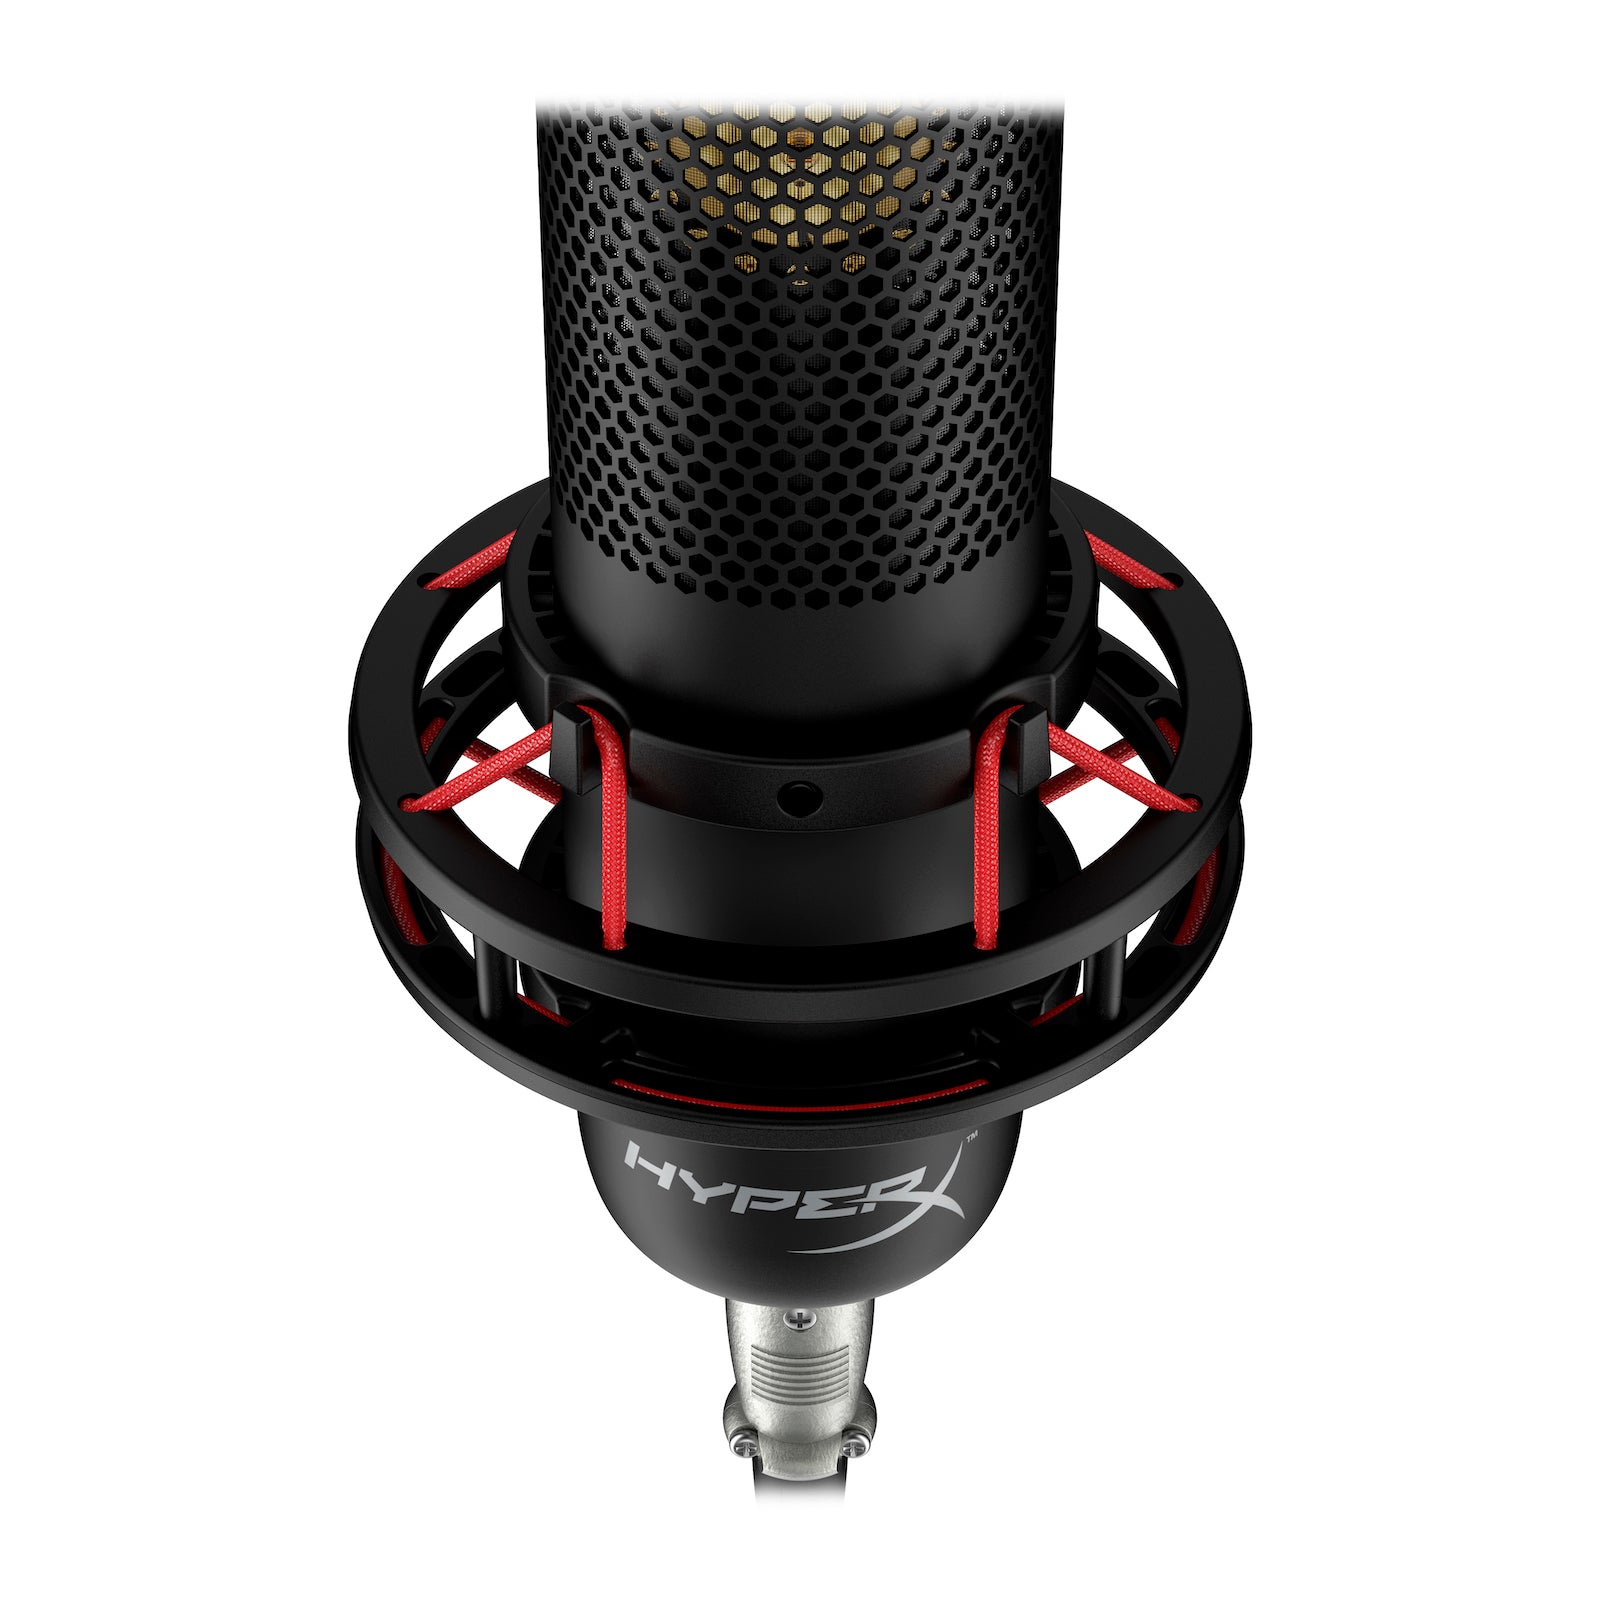 HyperX Procast microphone Shock mount closeup